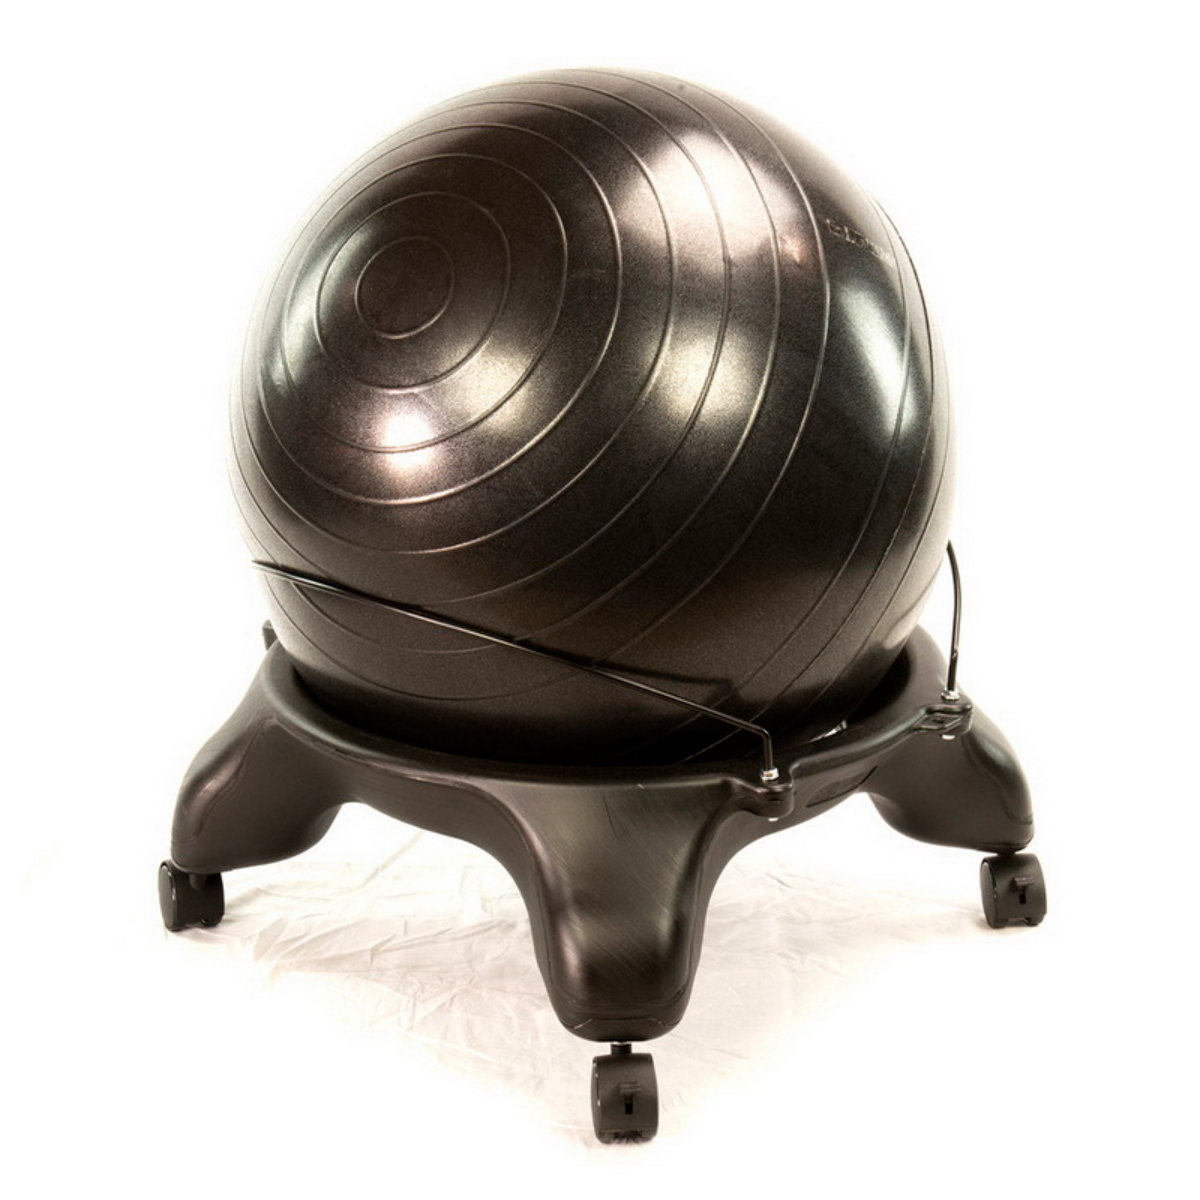 Aeromat Ball Chair Deluxe - Black